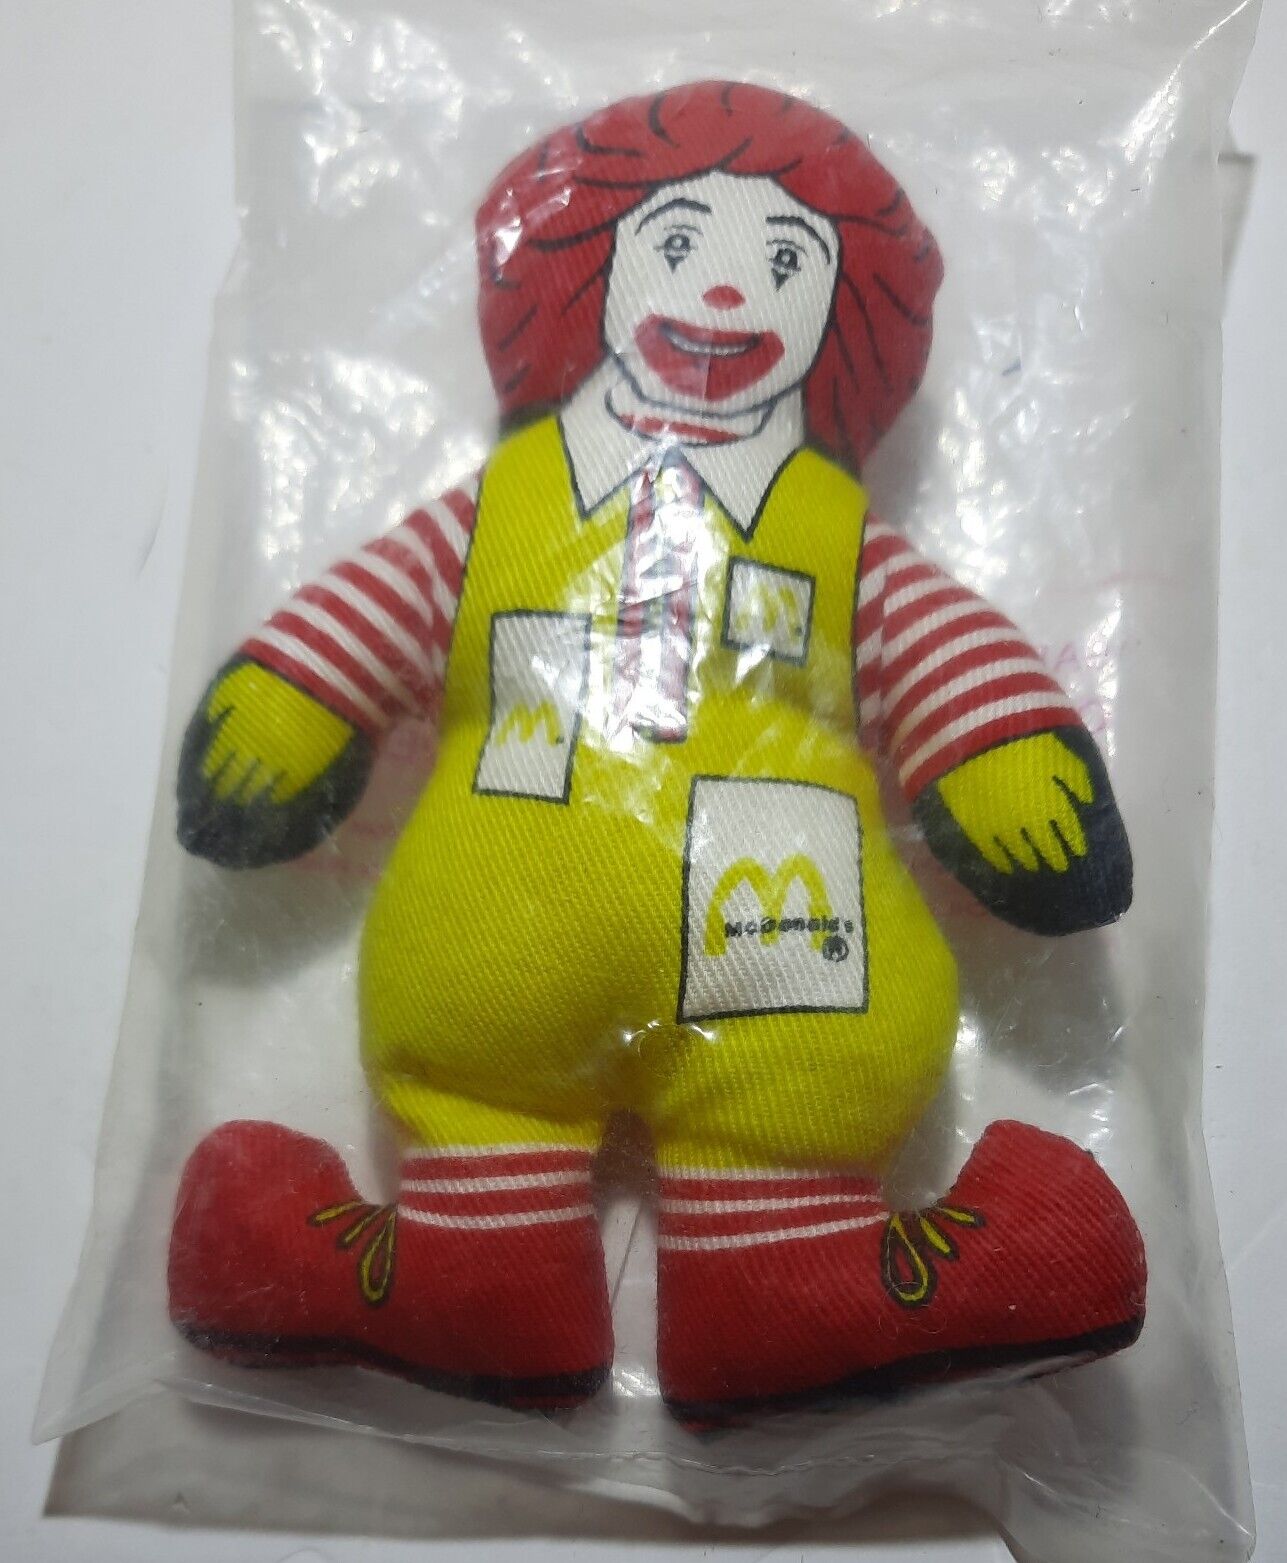 1984 Mini Ronald McDonald Plush 5” Vintage Fast Food Character New In Bag